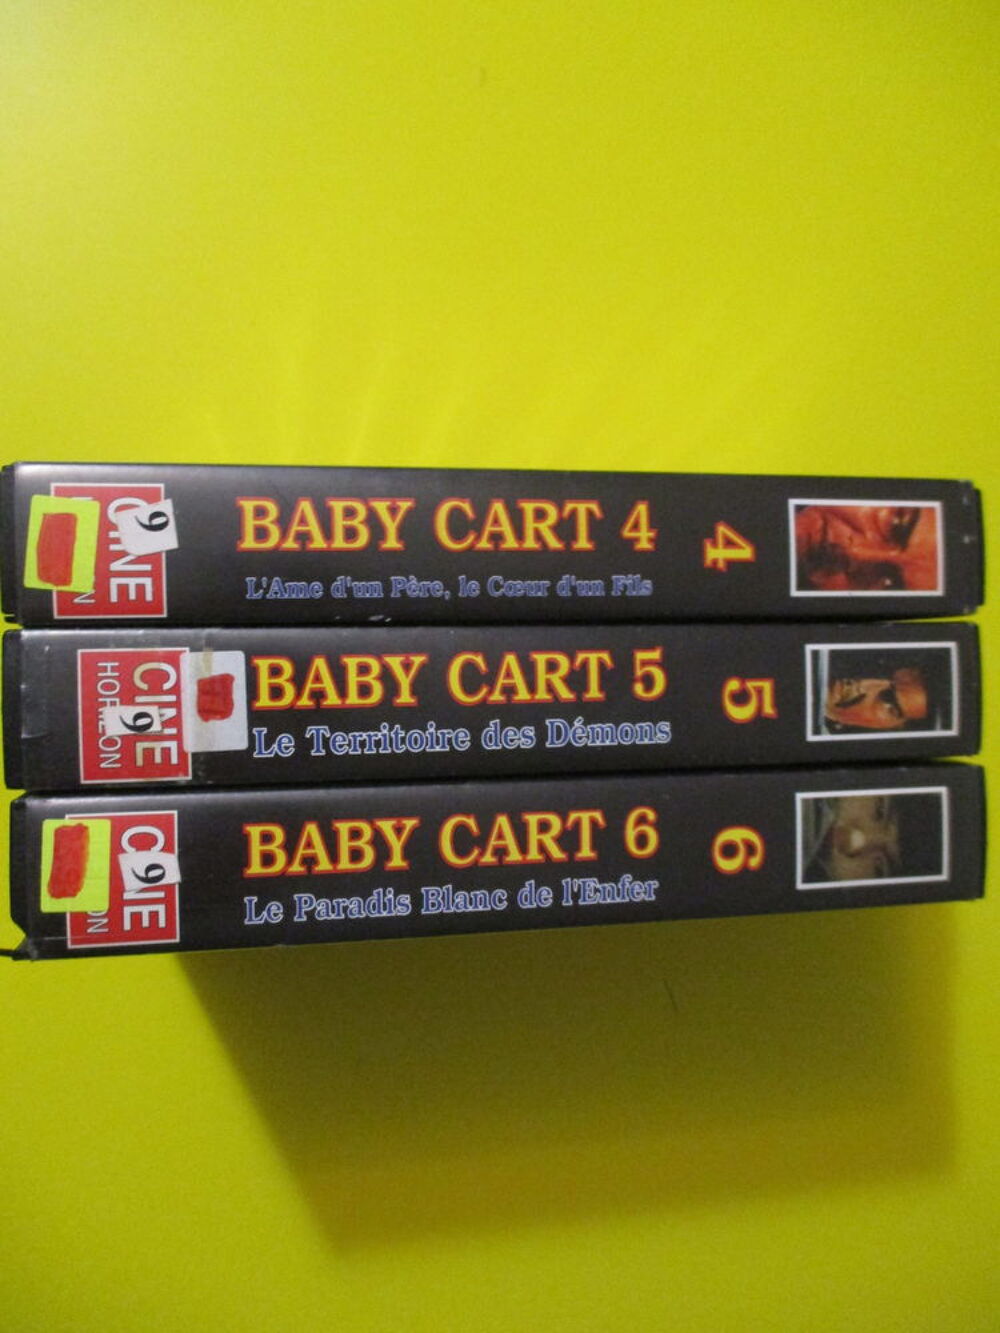 BABYCART 3 VHS SAMOURAI RONIN JAPON DVD et blu-ray